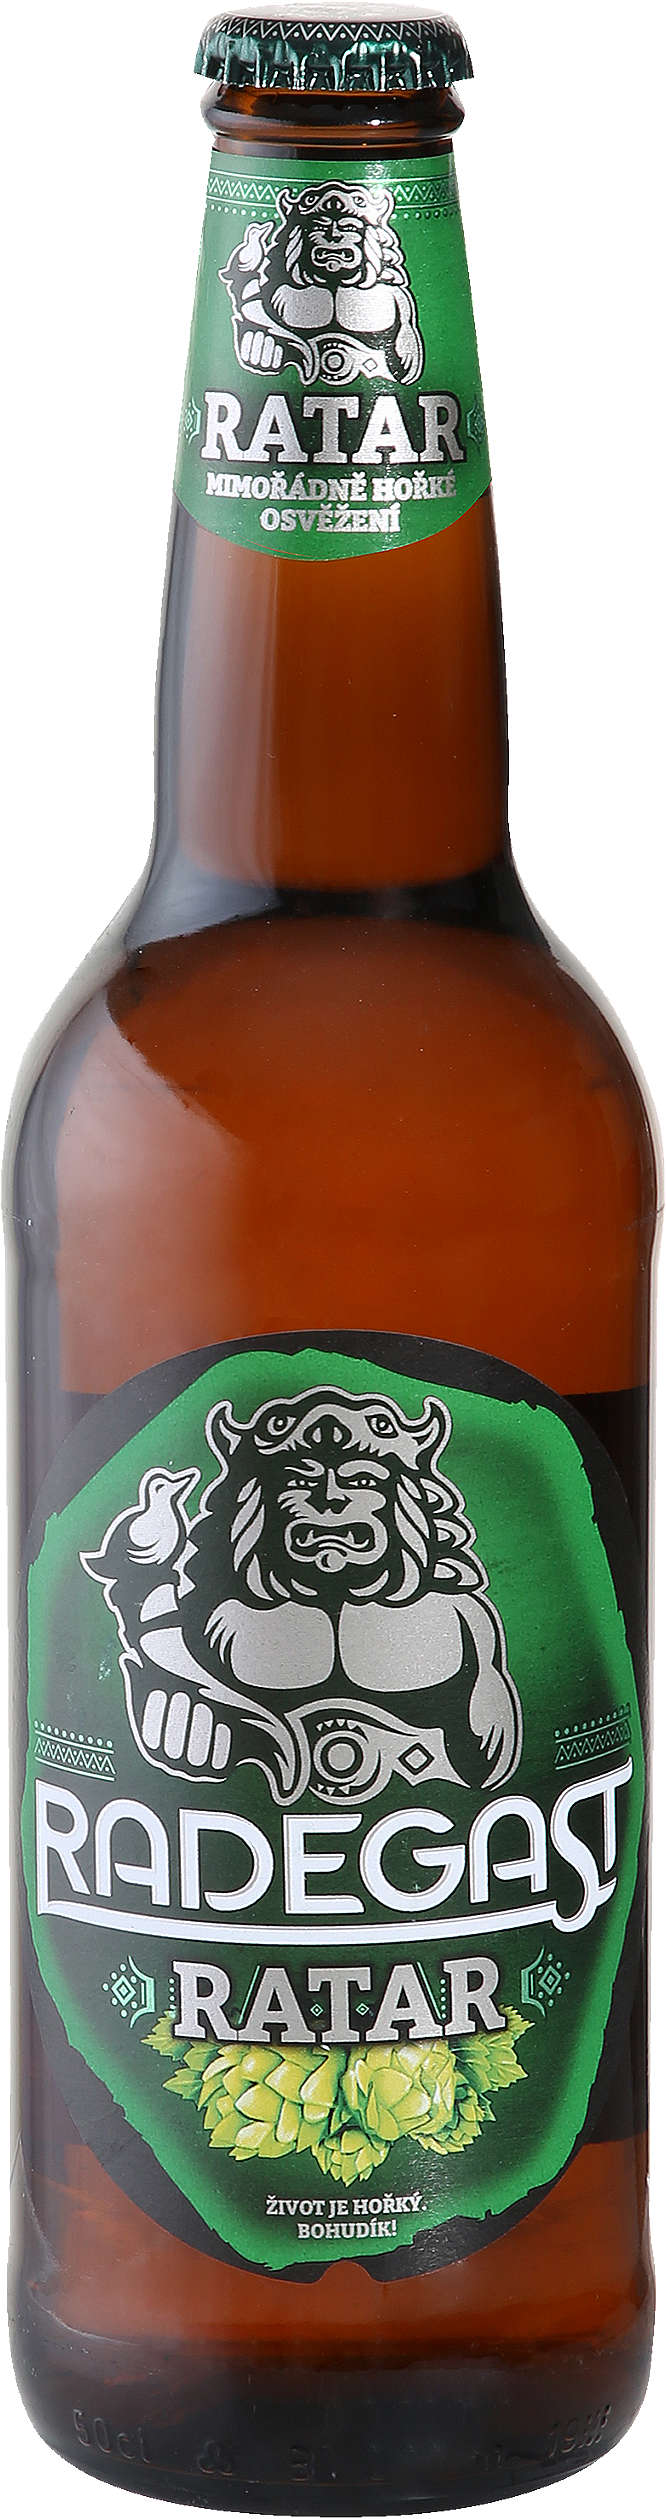 Zobrazenie výrobku Radegast Pivo